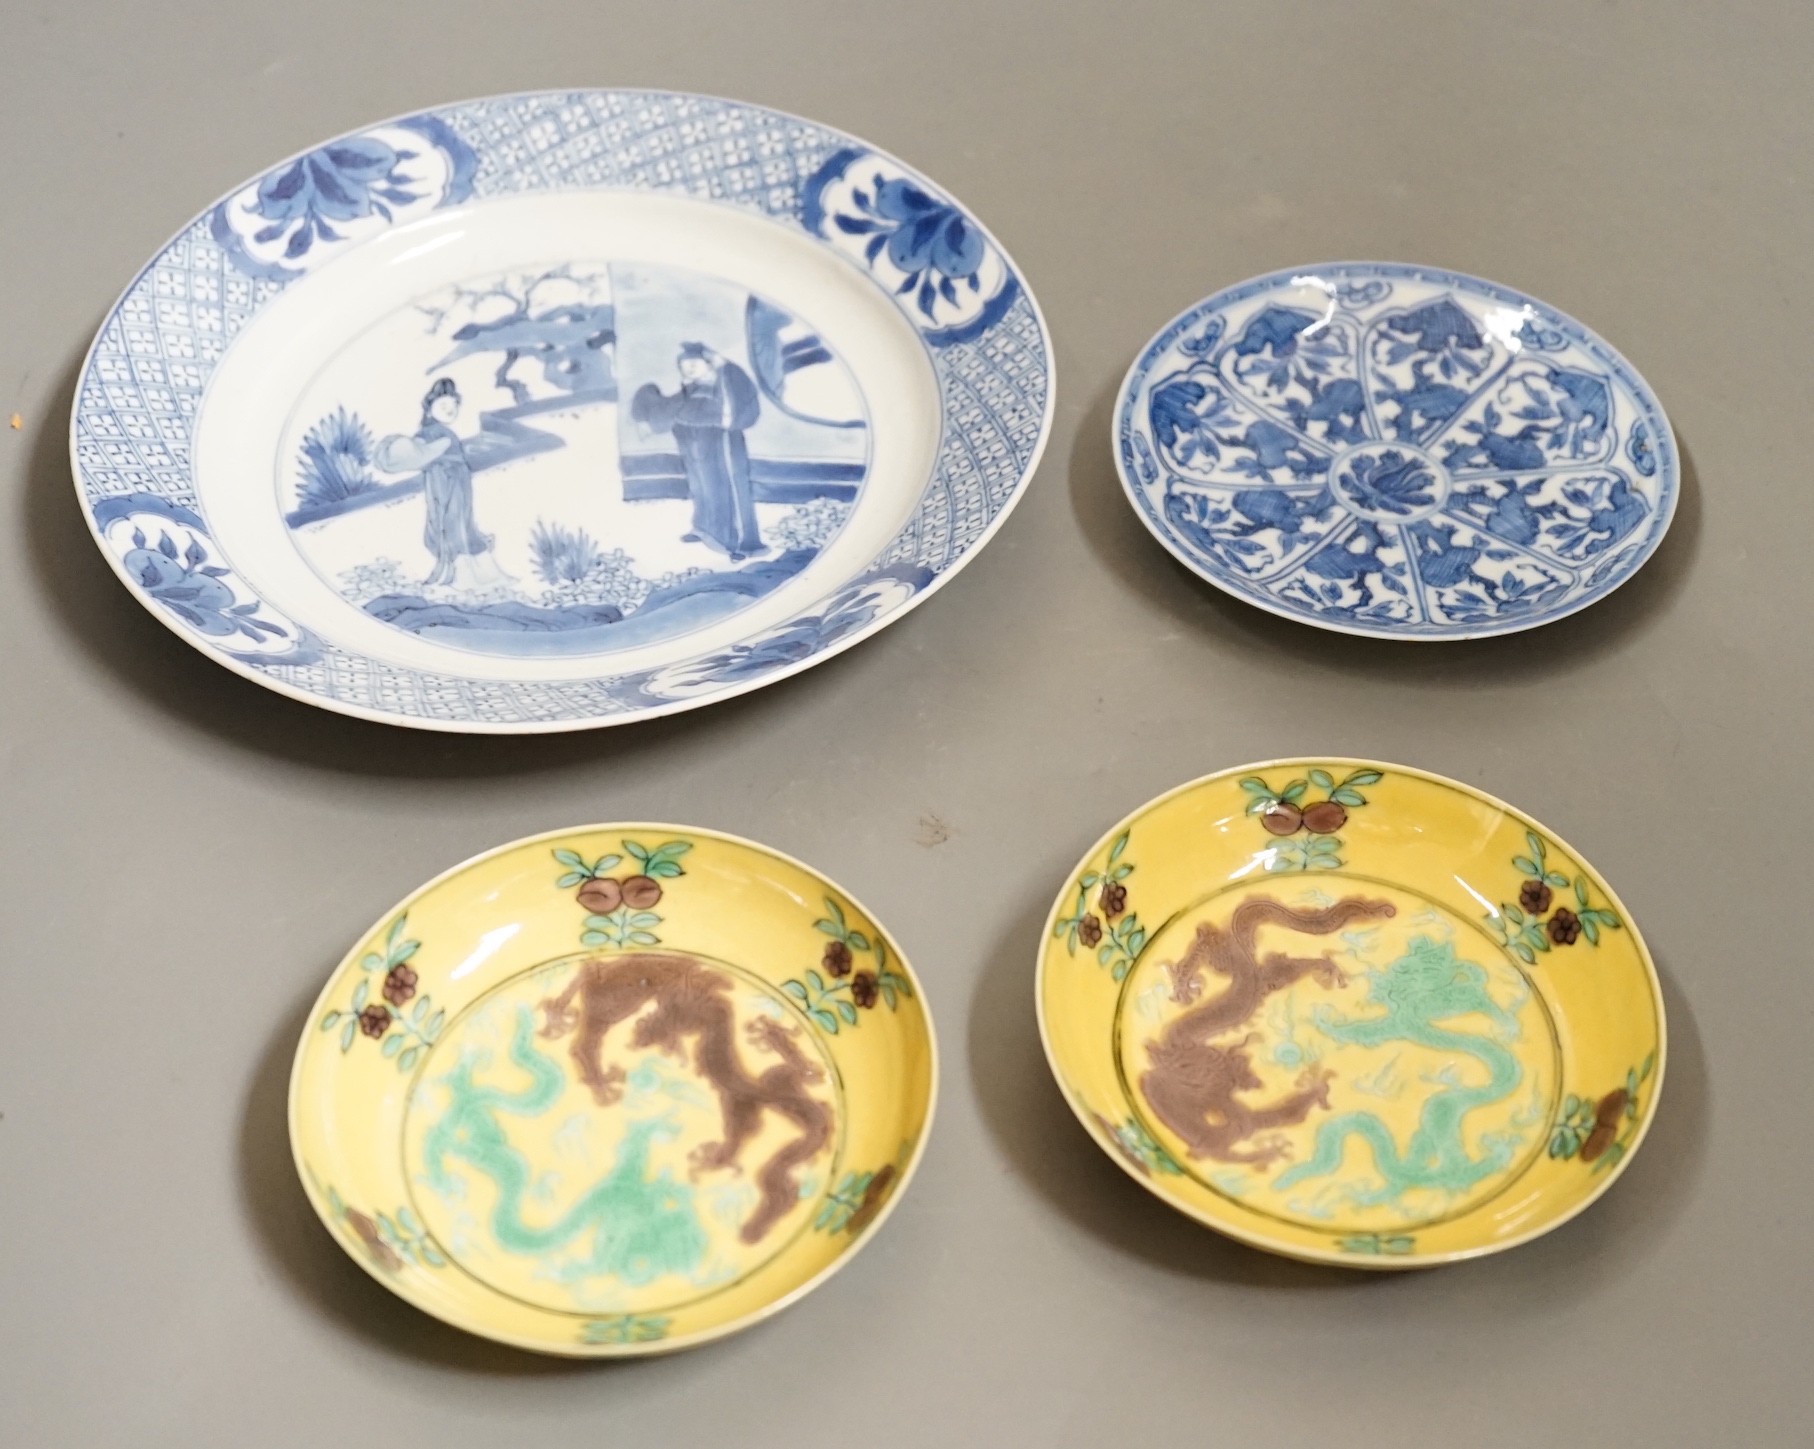 A pair of Chinese dragon dishes, a Kangxi blue and white plate, a Kangxi blue and white dish with chenghua mark